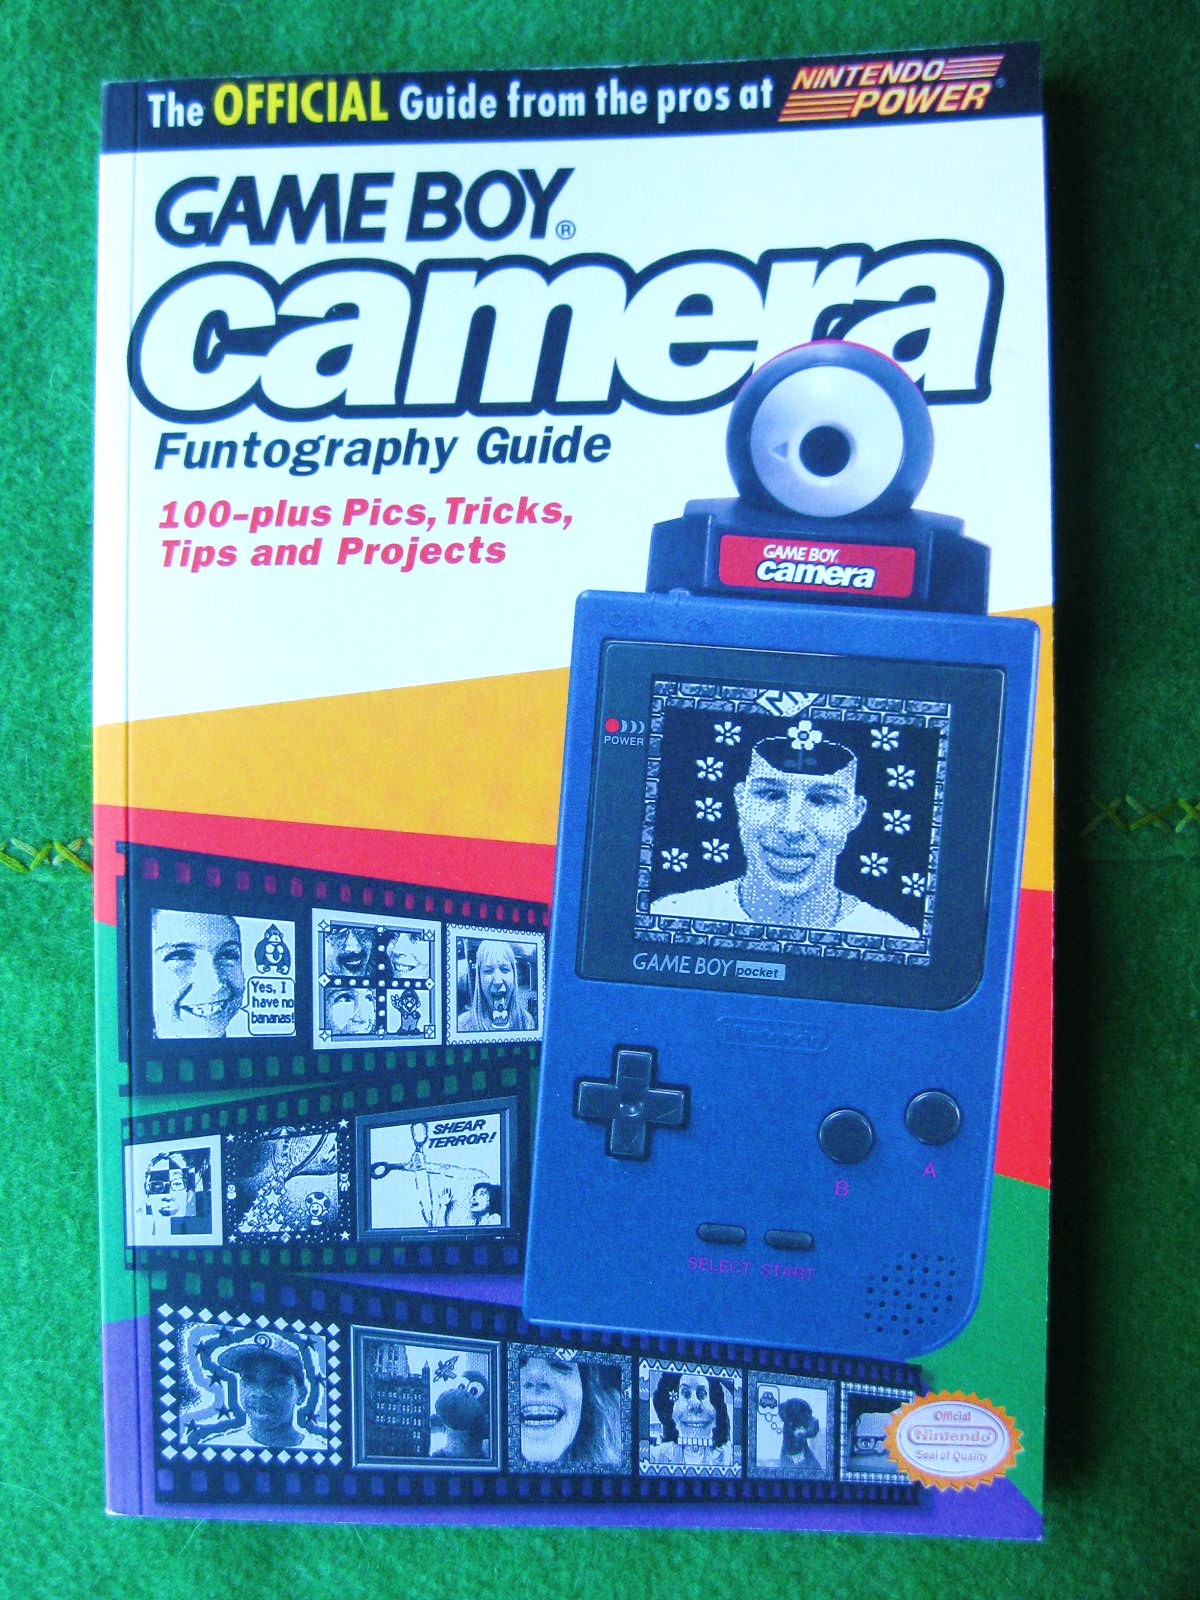 Mine game boy. Nintendo game boy Camera. Game boy book. Game boy Camera frames. Game boy Camera shoot.